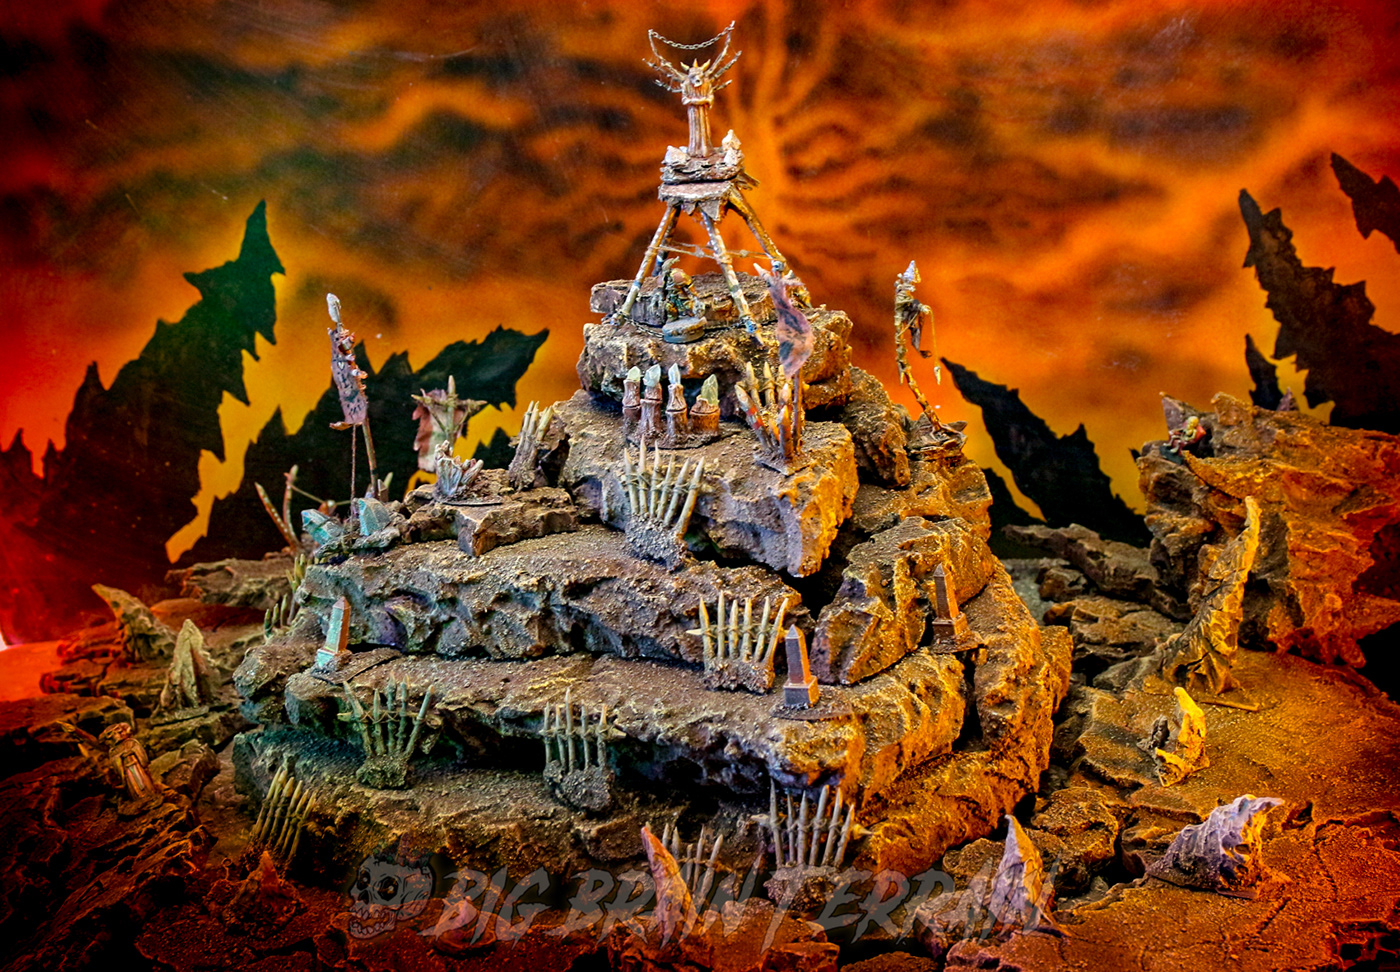 dnd fantasy rpg hell handmade craft sculpture Streaming Gaming Diorama